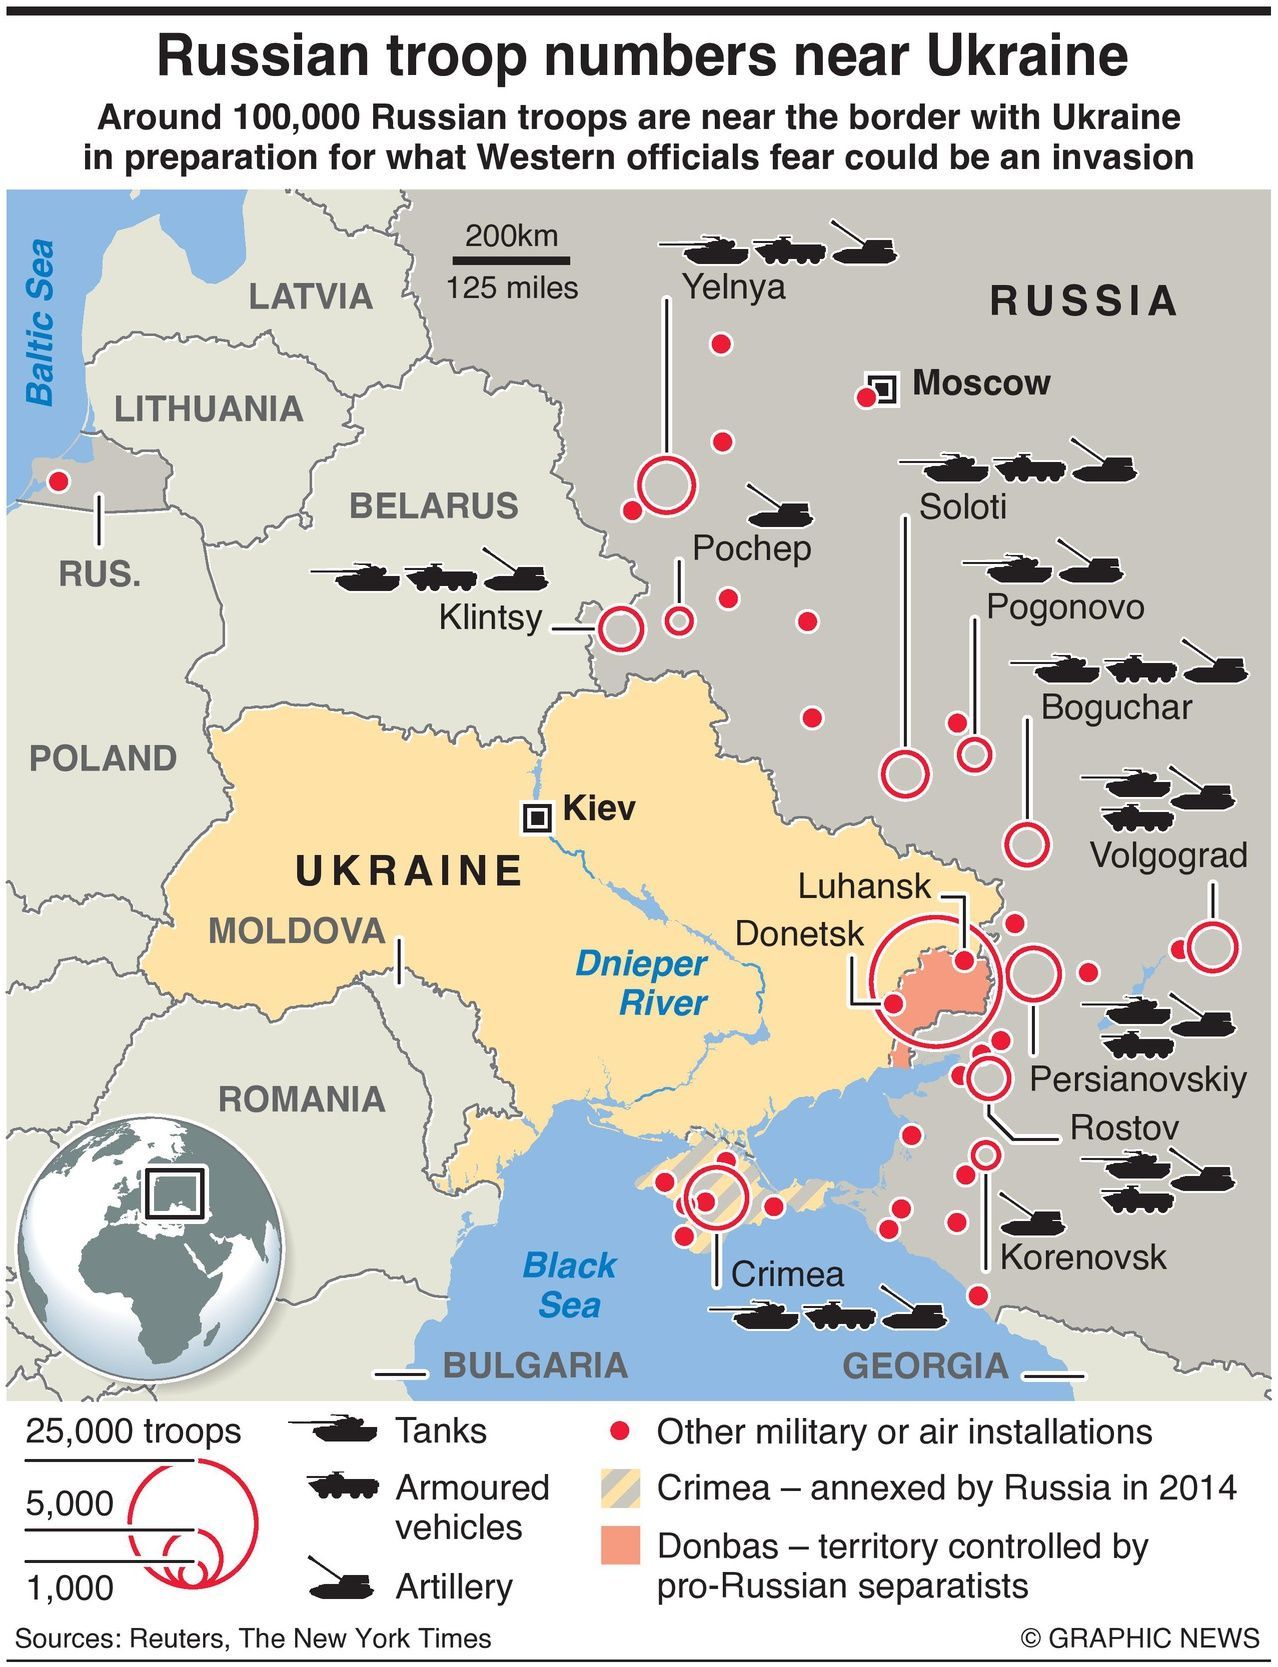 Positions of Russian Military Units near Ukrainian border